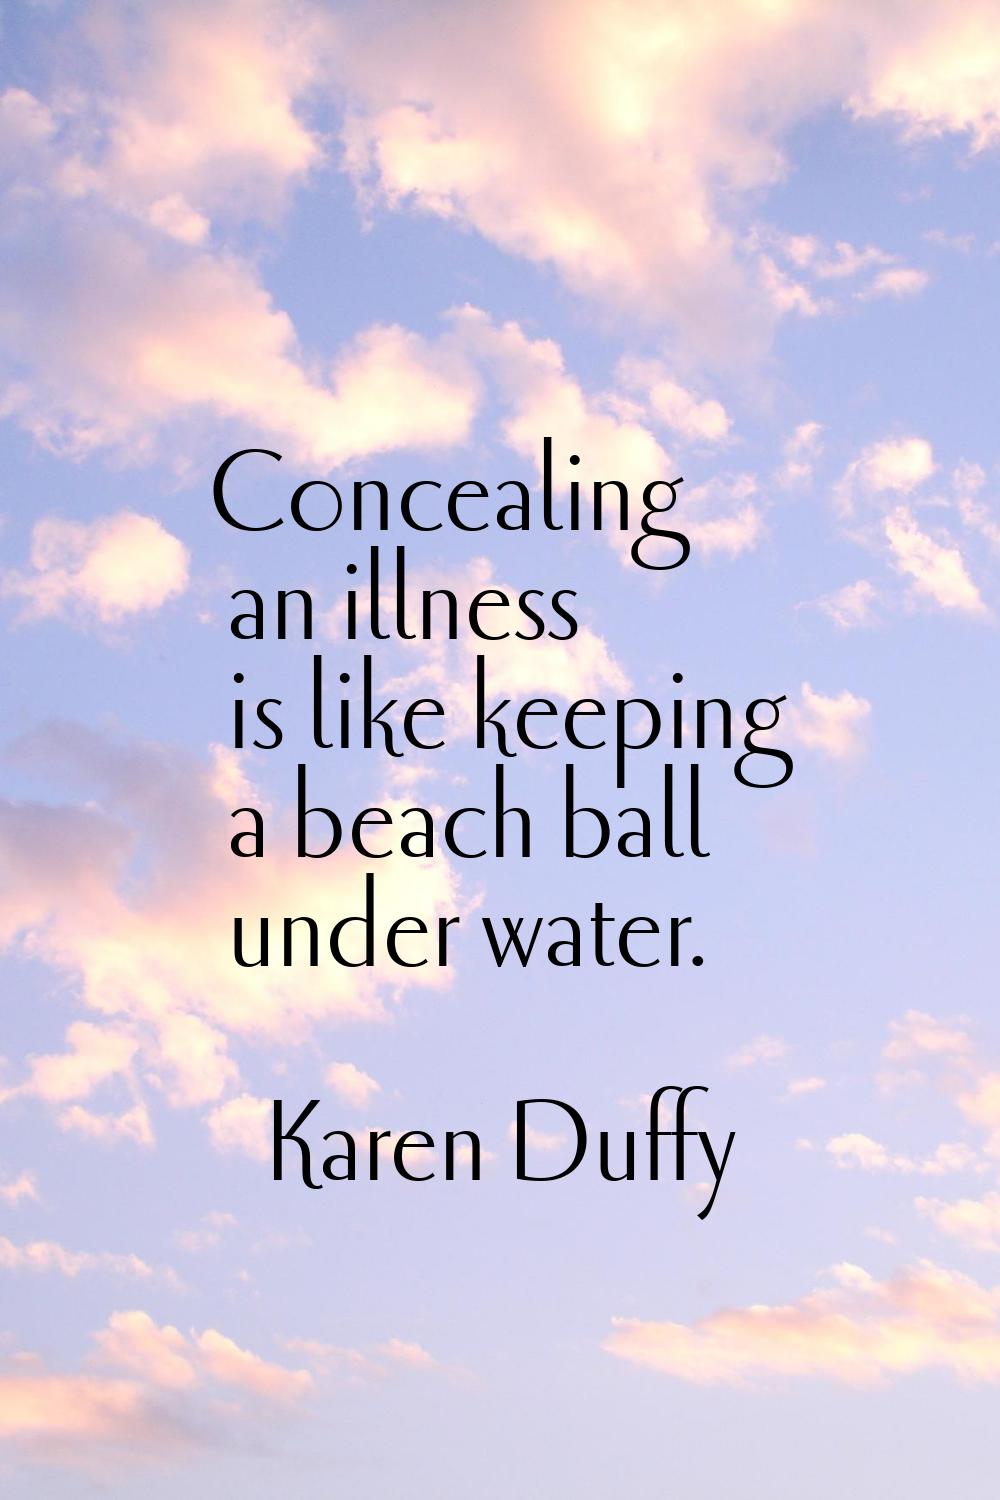 Concealing an illness is like keeping a beach ball under water.